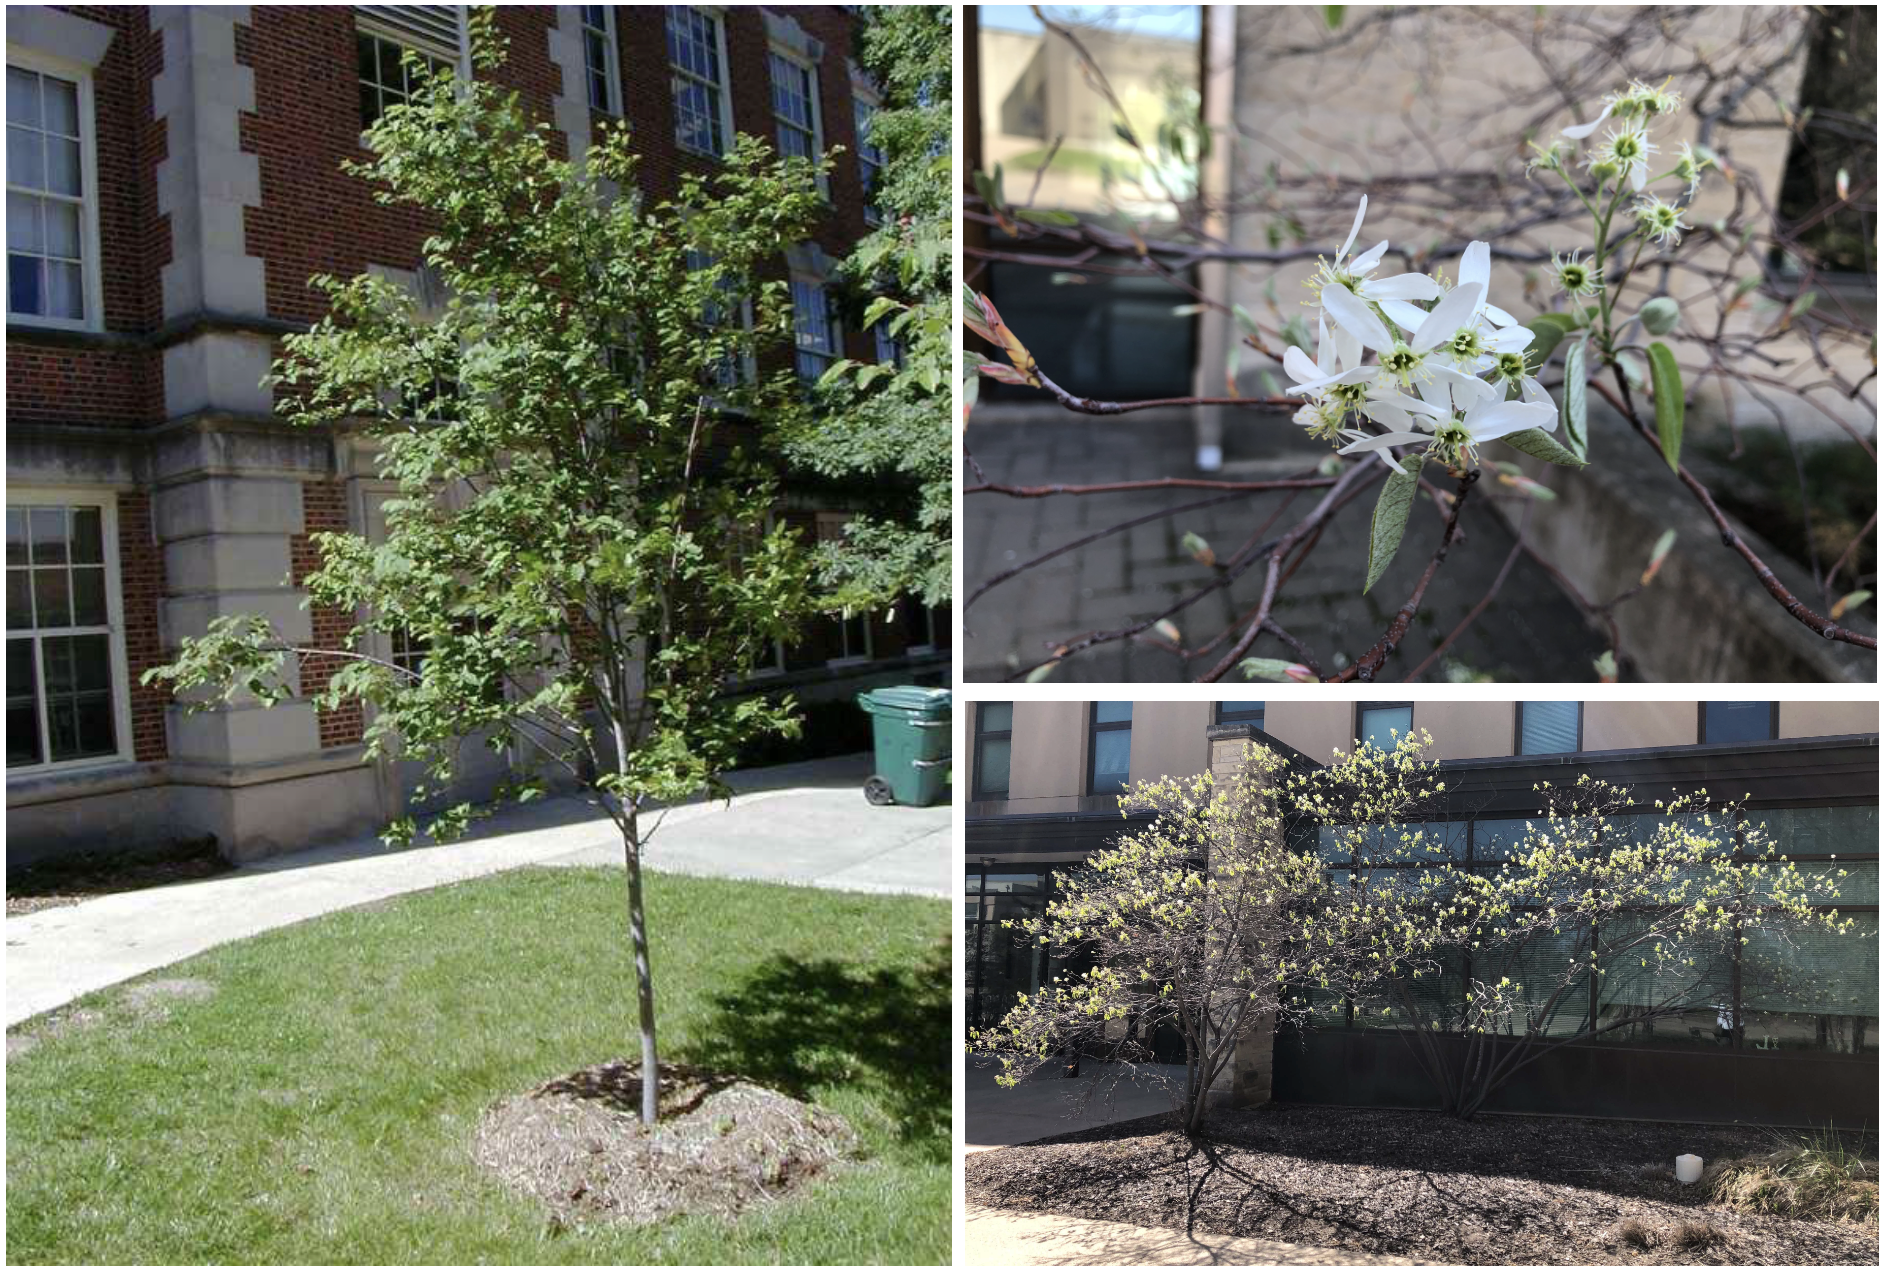 Downy Serviceberry Trees on MU Campus